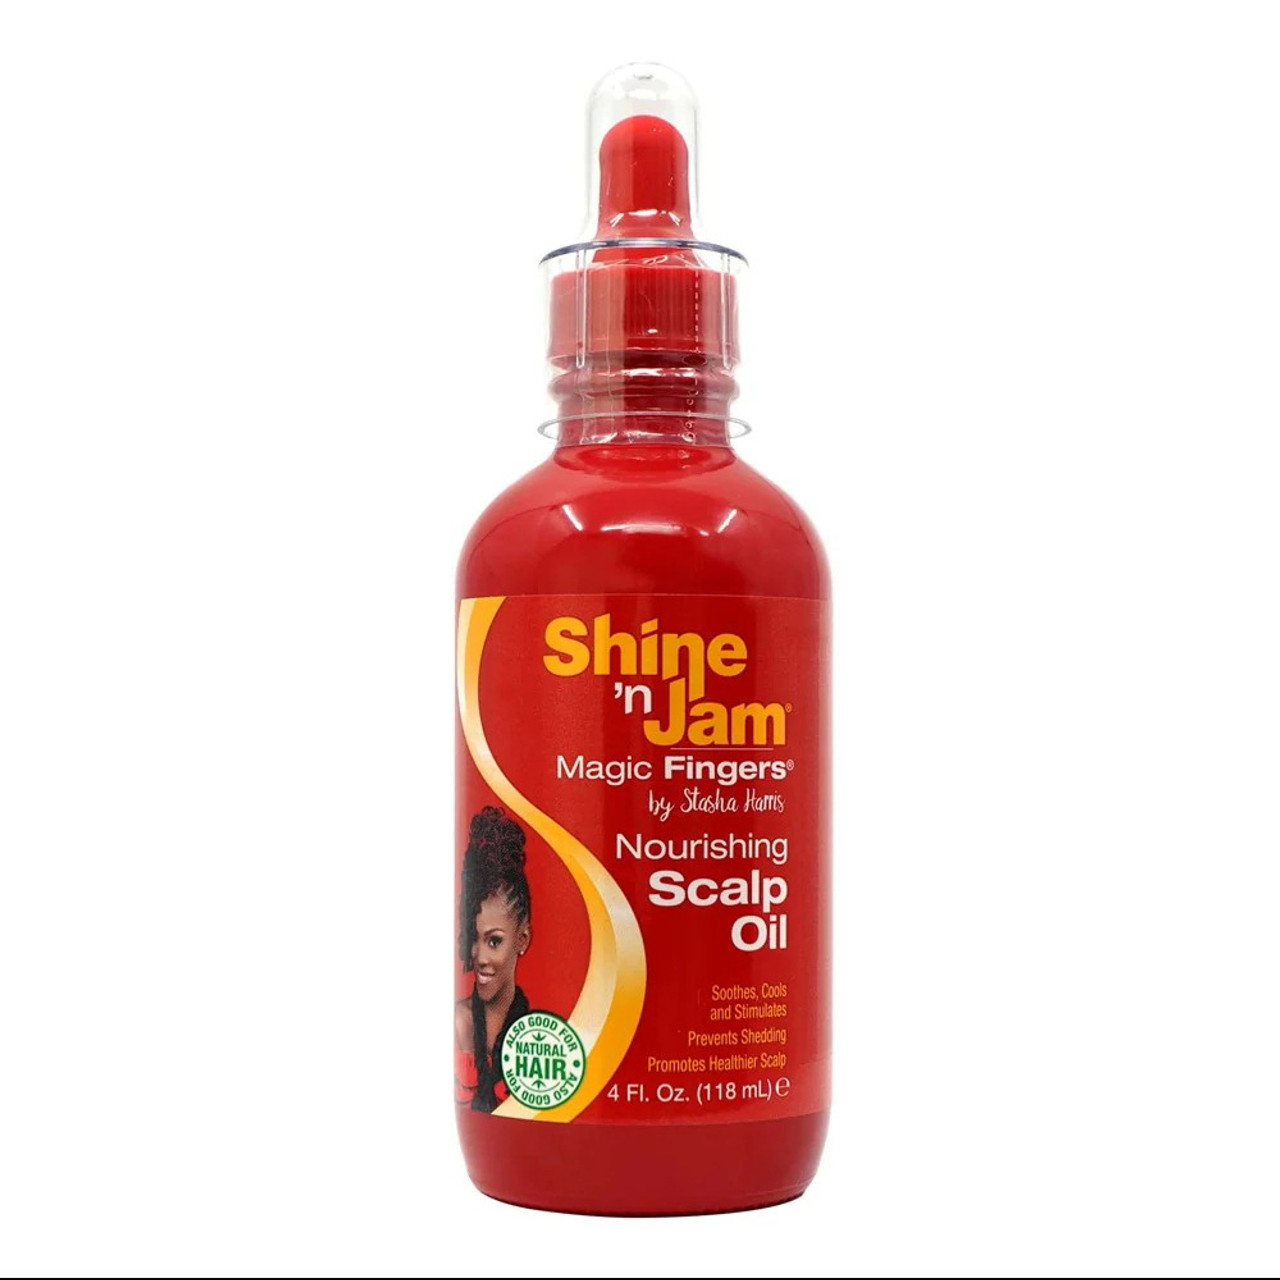 Shine 'N Jam Magic Fingers Finishing Sheen, For Braiders - 11.5 oz